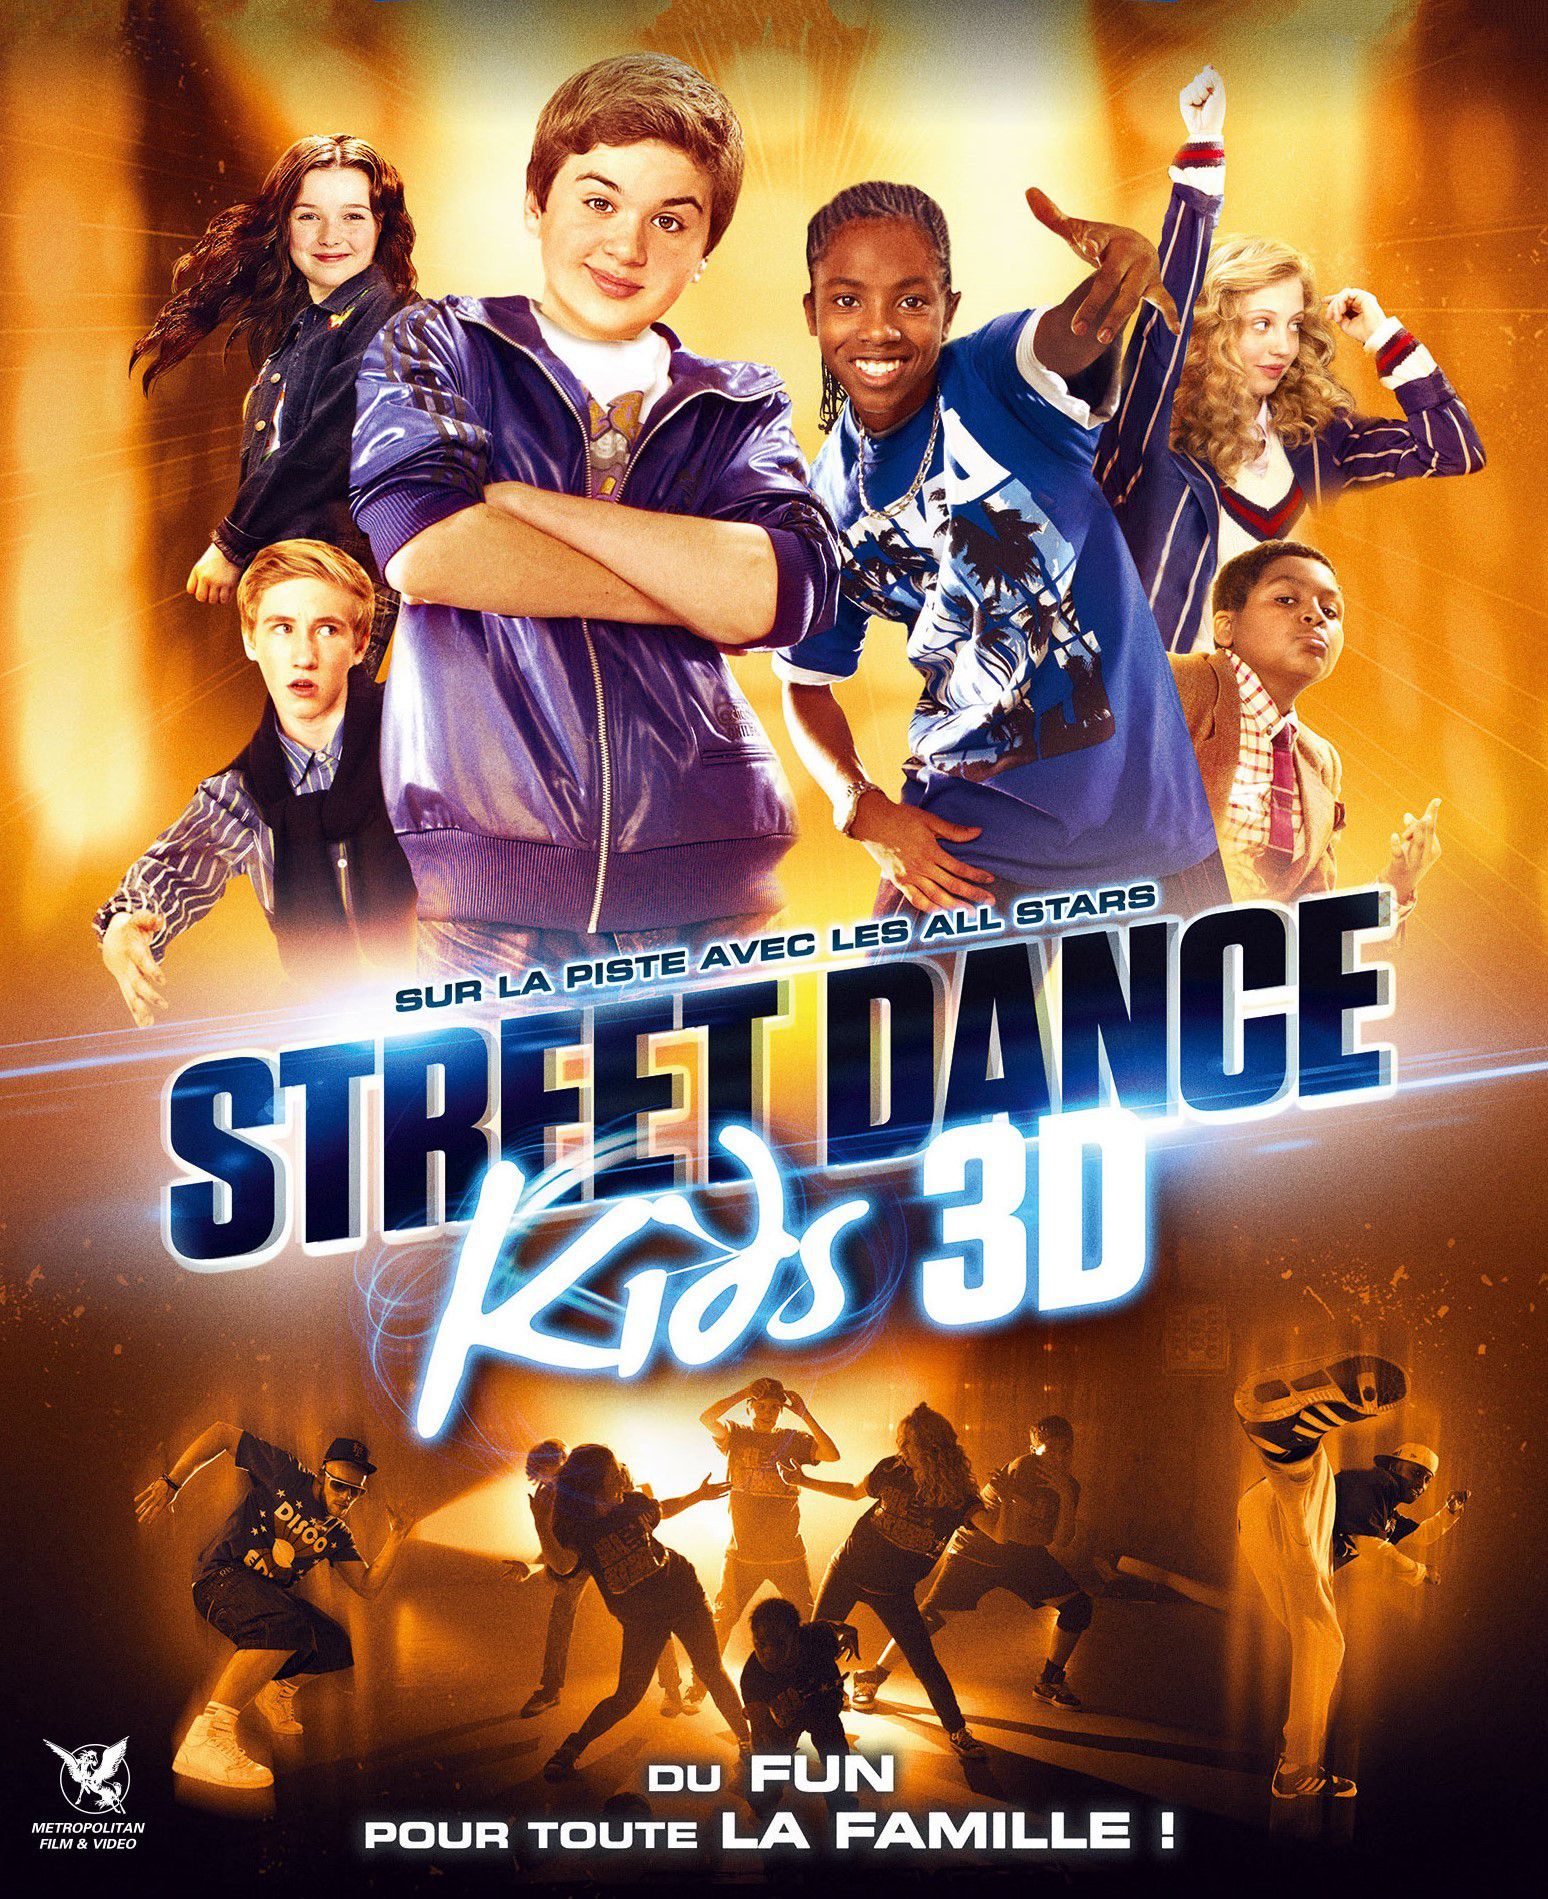 Street Dance Kids - Film (2013) streaming VF gratuit complet